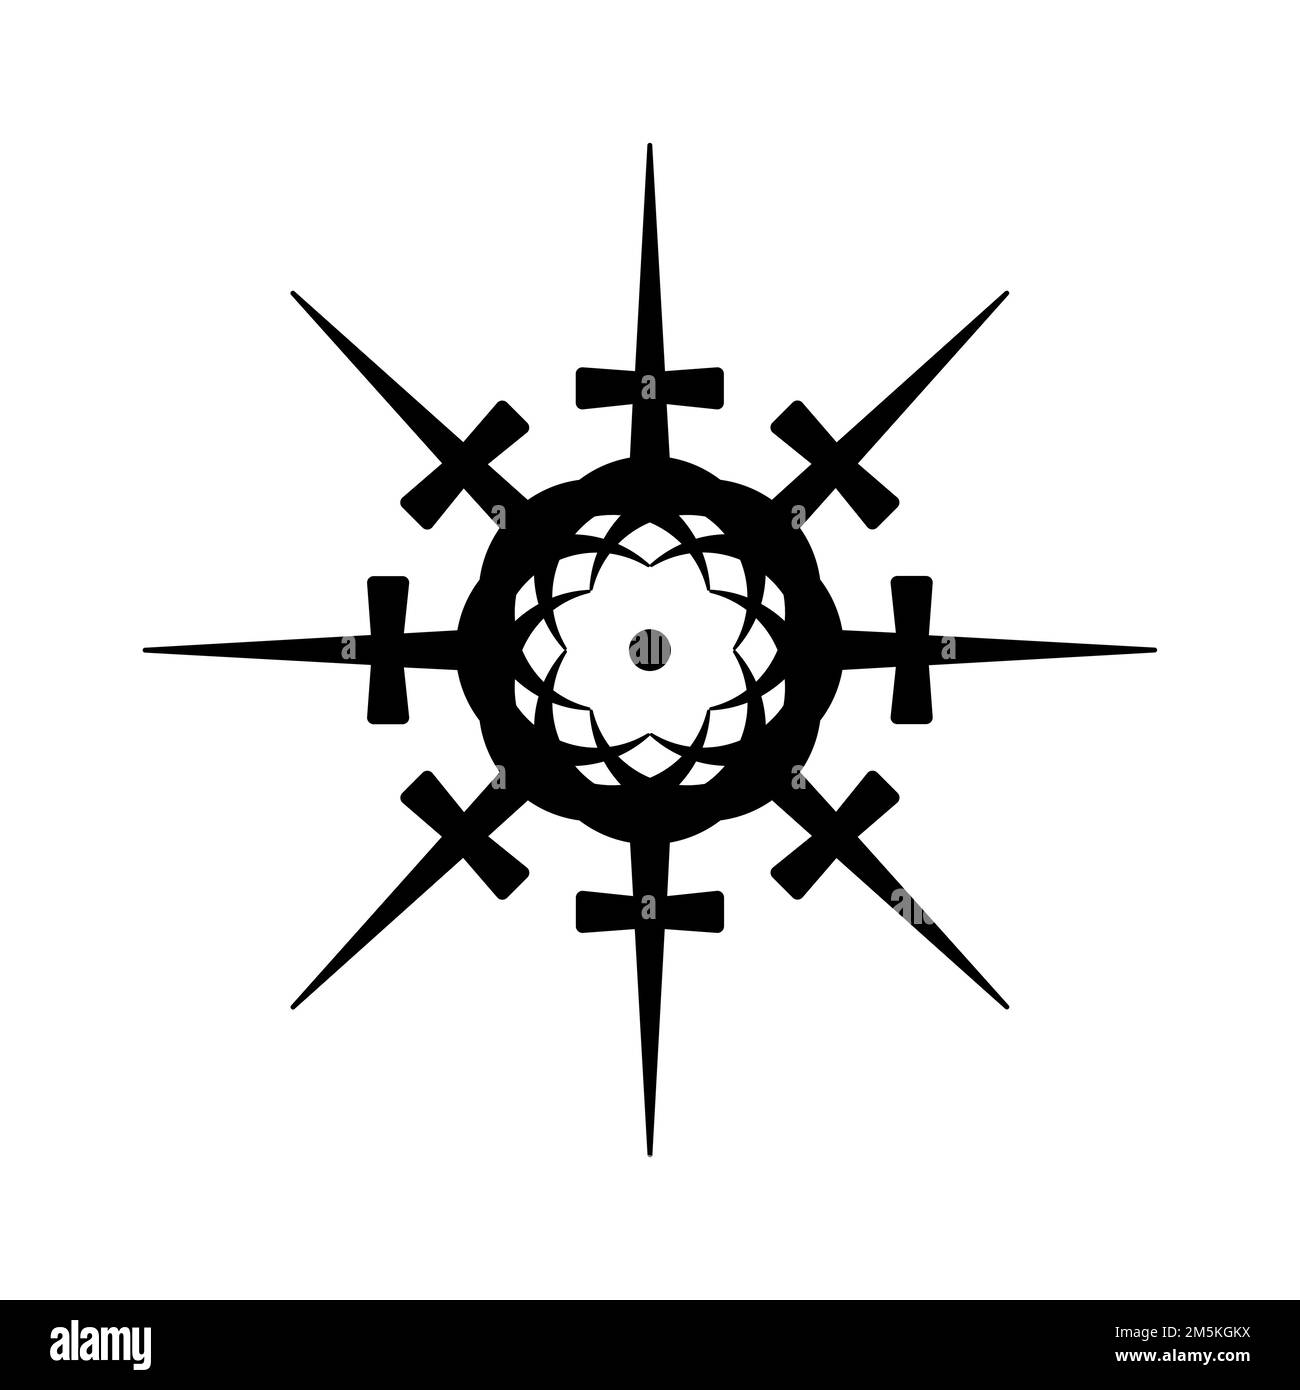 Occult mystical crosses, chaos mandala symbol of war. Masonic sacred geometry, black tattoo sign. Religious symbol of the Templar warriors. Vector Stock Vector